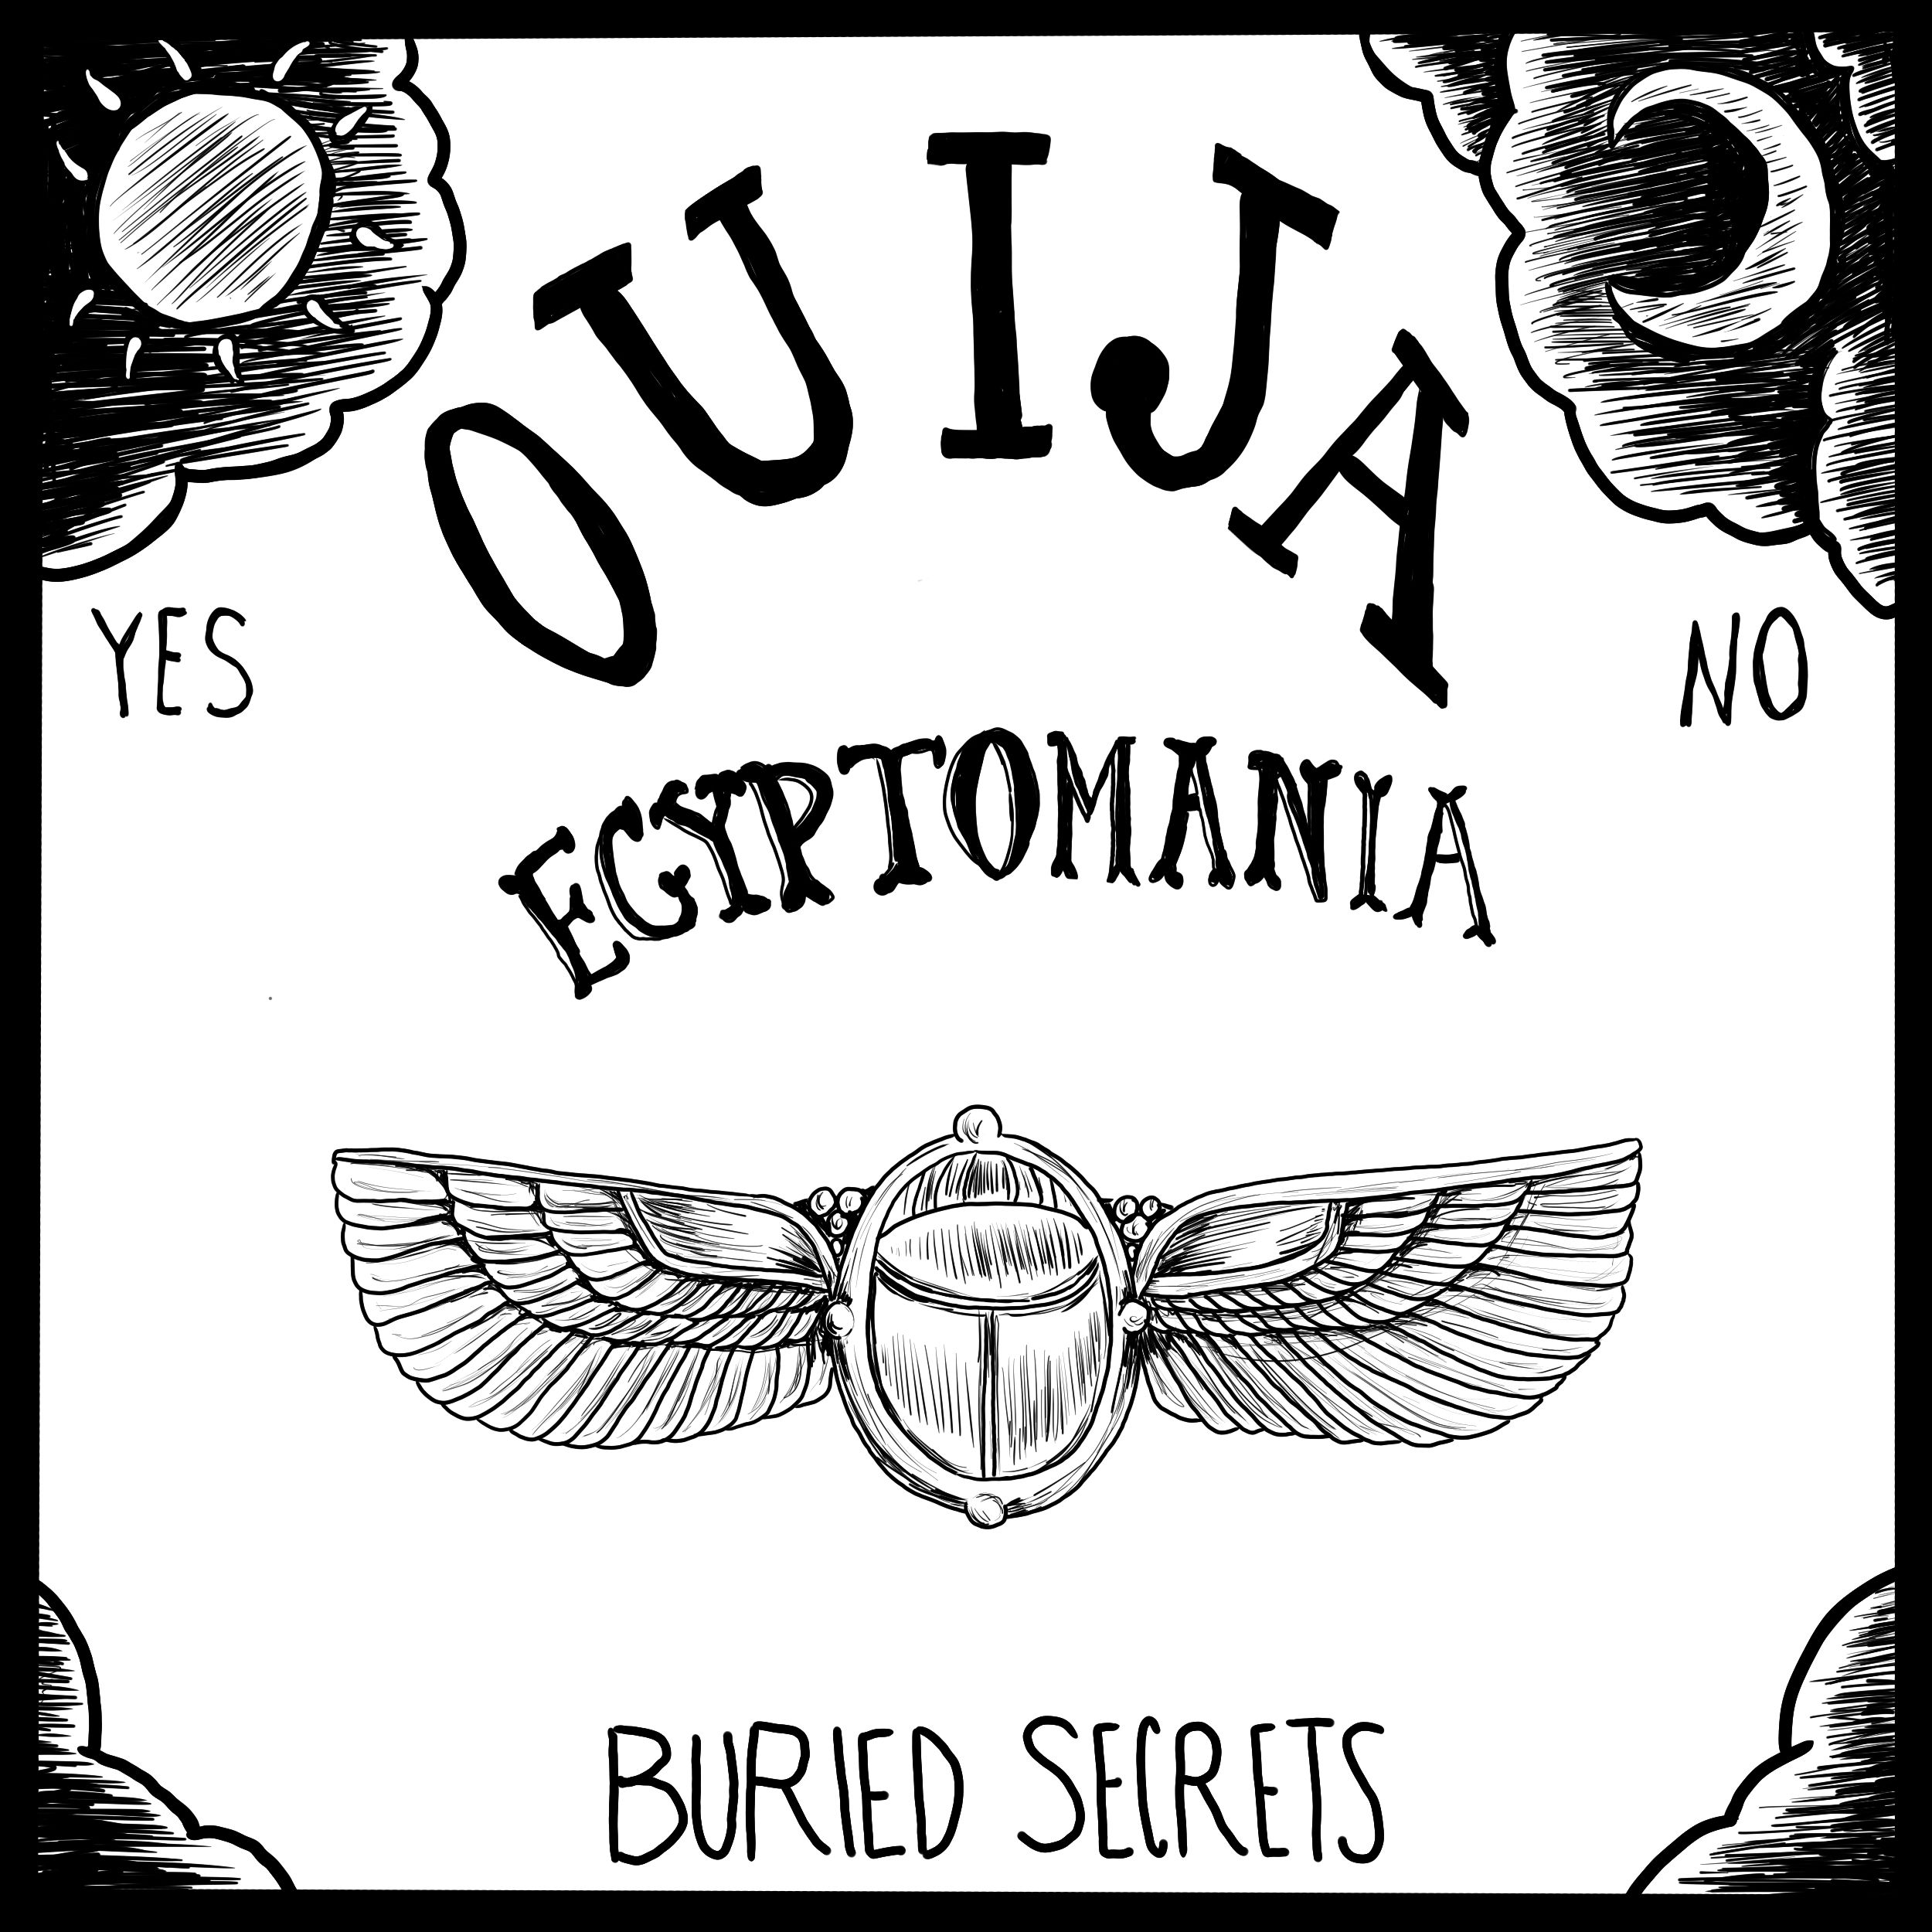 Victorian Egyptomania (Ouija Boards Part 5)